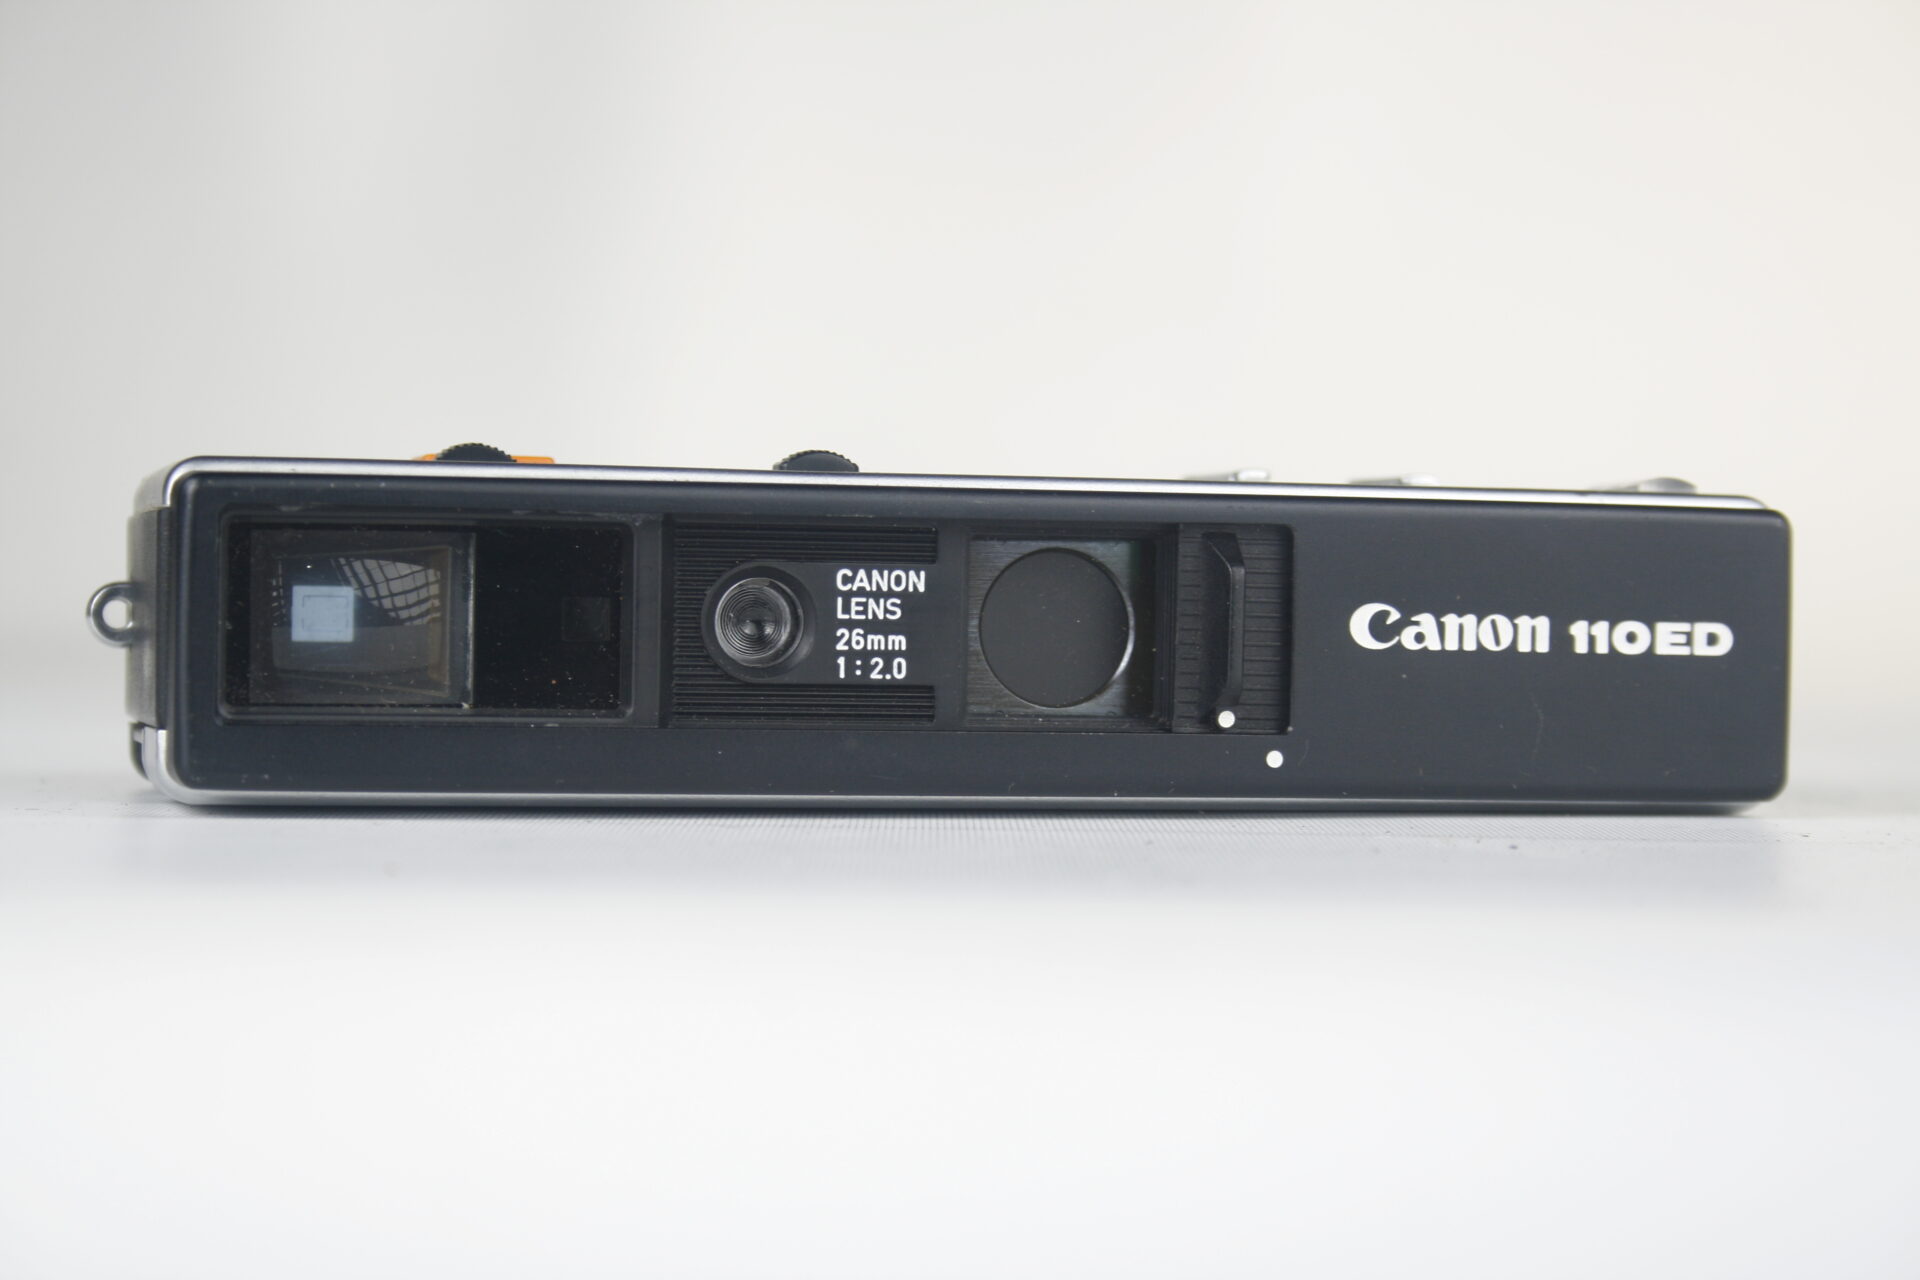 Canon 110 ED pocket instamatic camera. 110 film. 1975. USA.